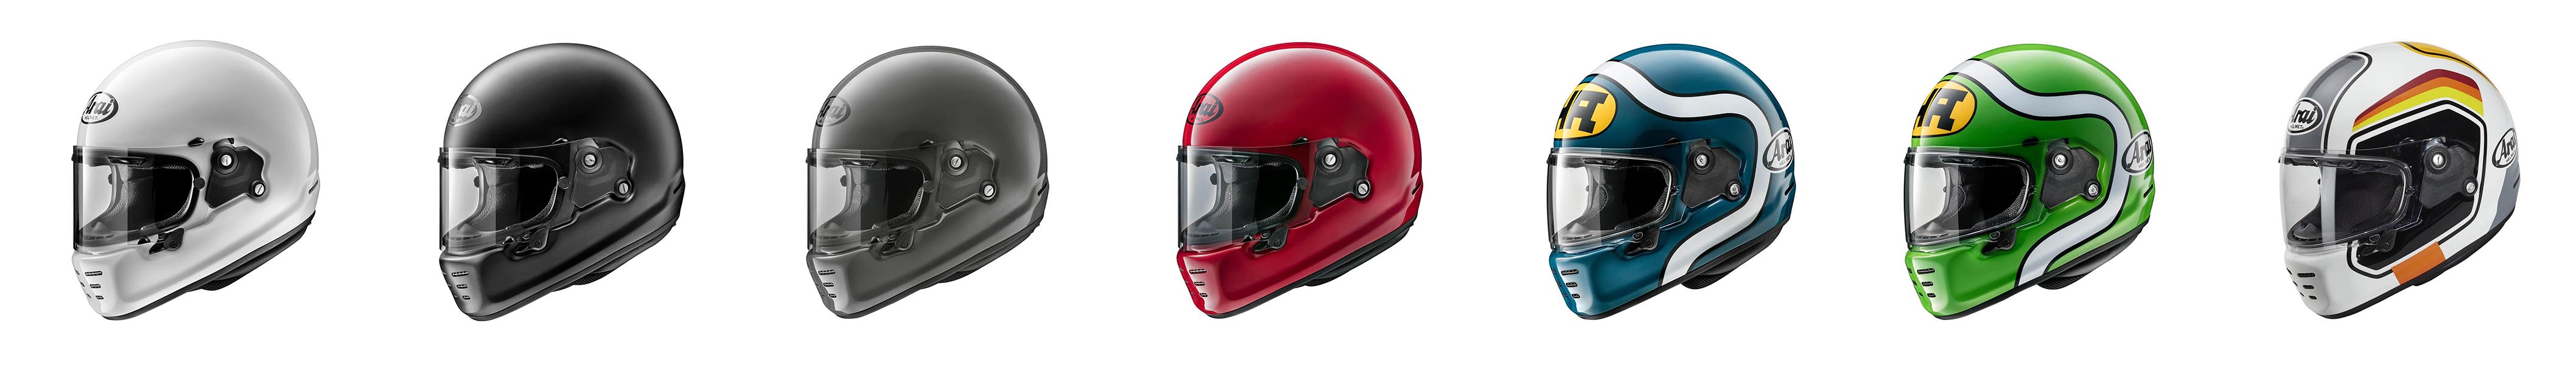 New ARAI Concept-X helmets at a glance